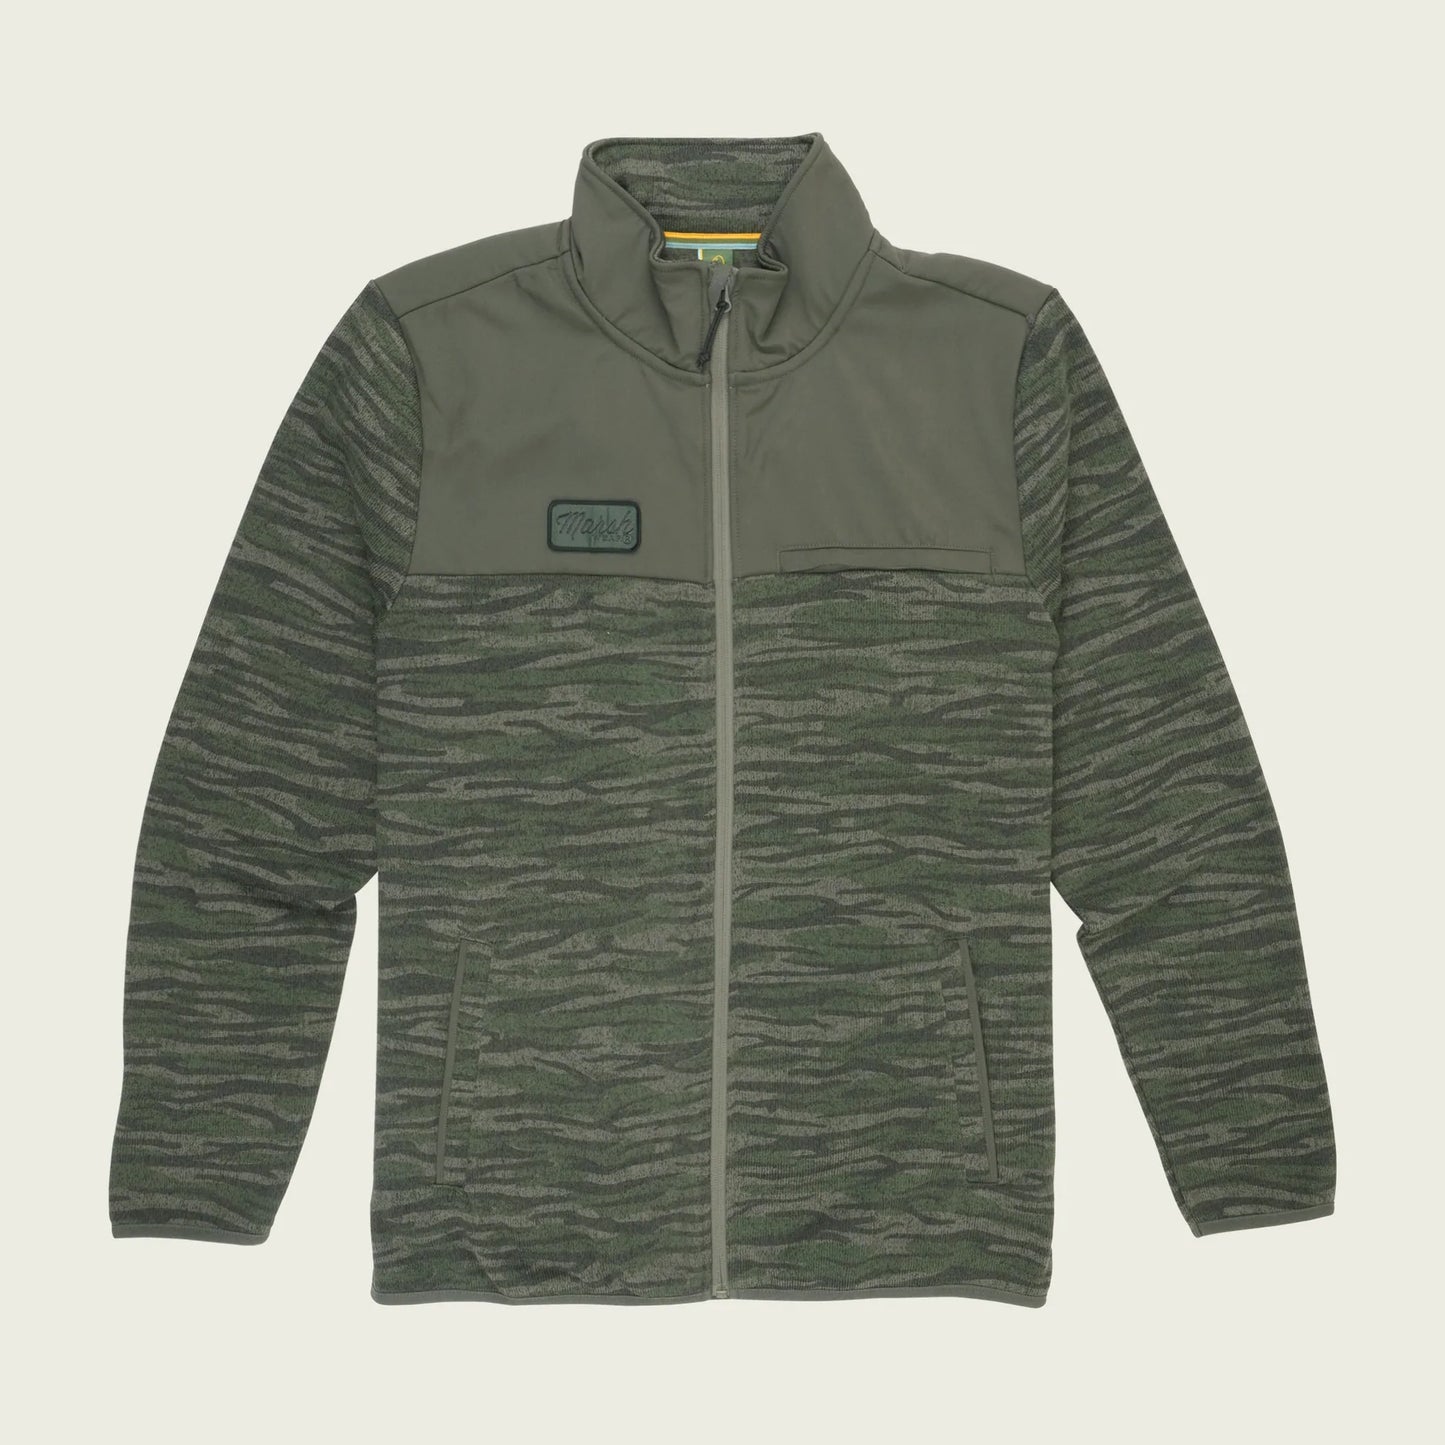 Marsh Wear Big Bay Fleece Jacket